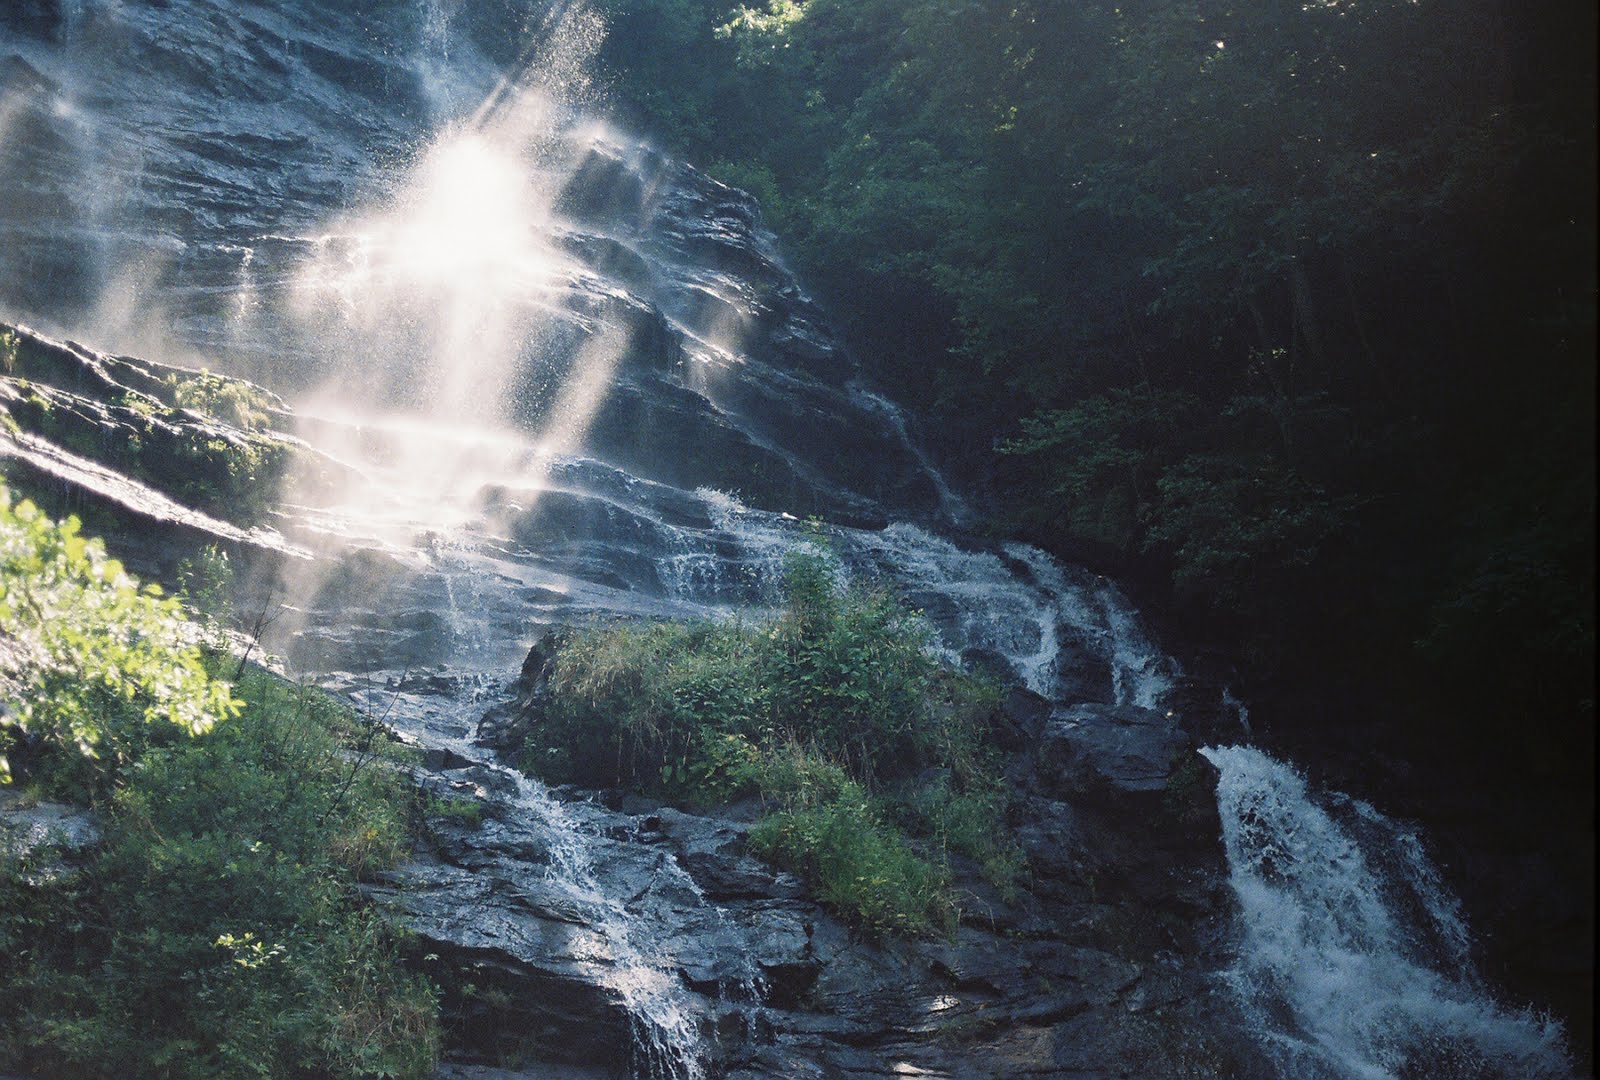 Amicalola Falls